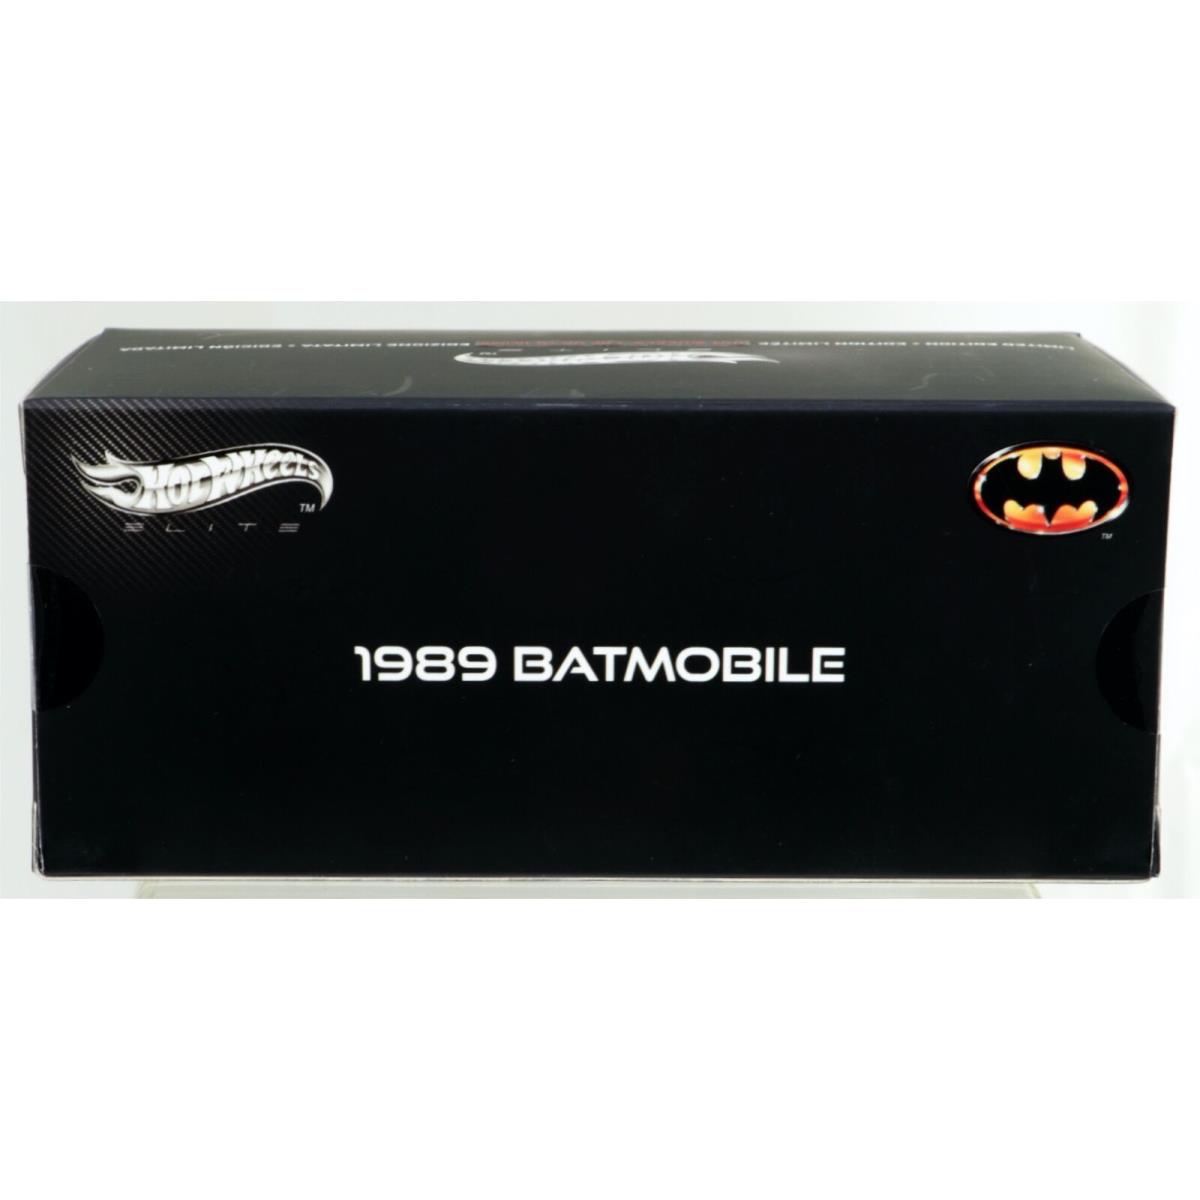 Hot Wheels Batman 1989 Batmobile Elite Limited Edition X5494 Nrfb 2012 1:43